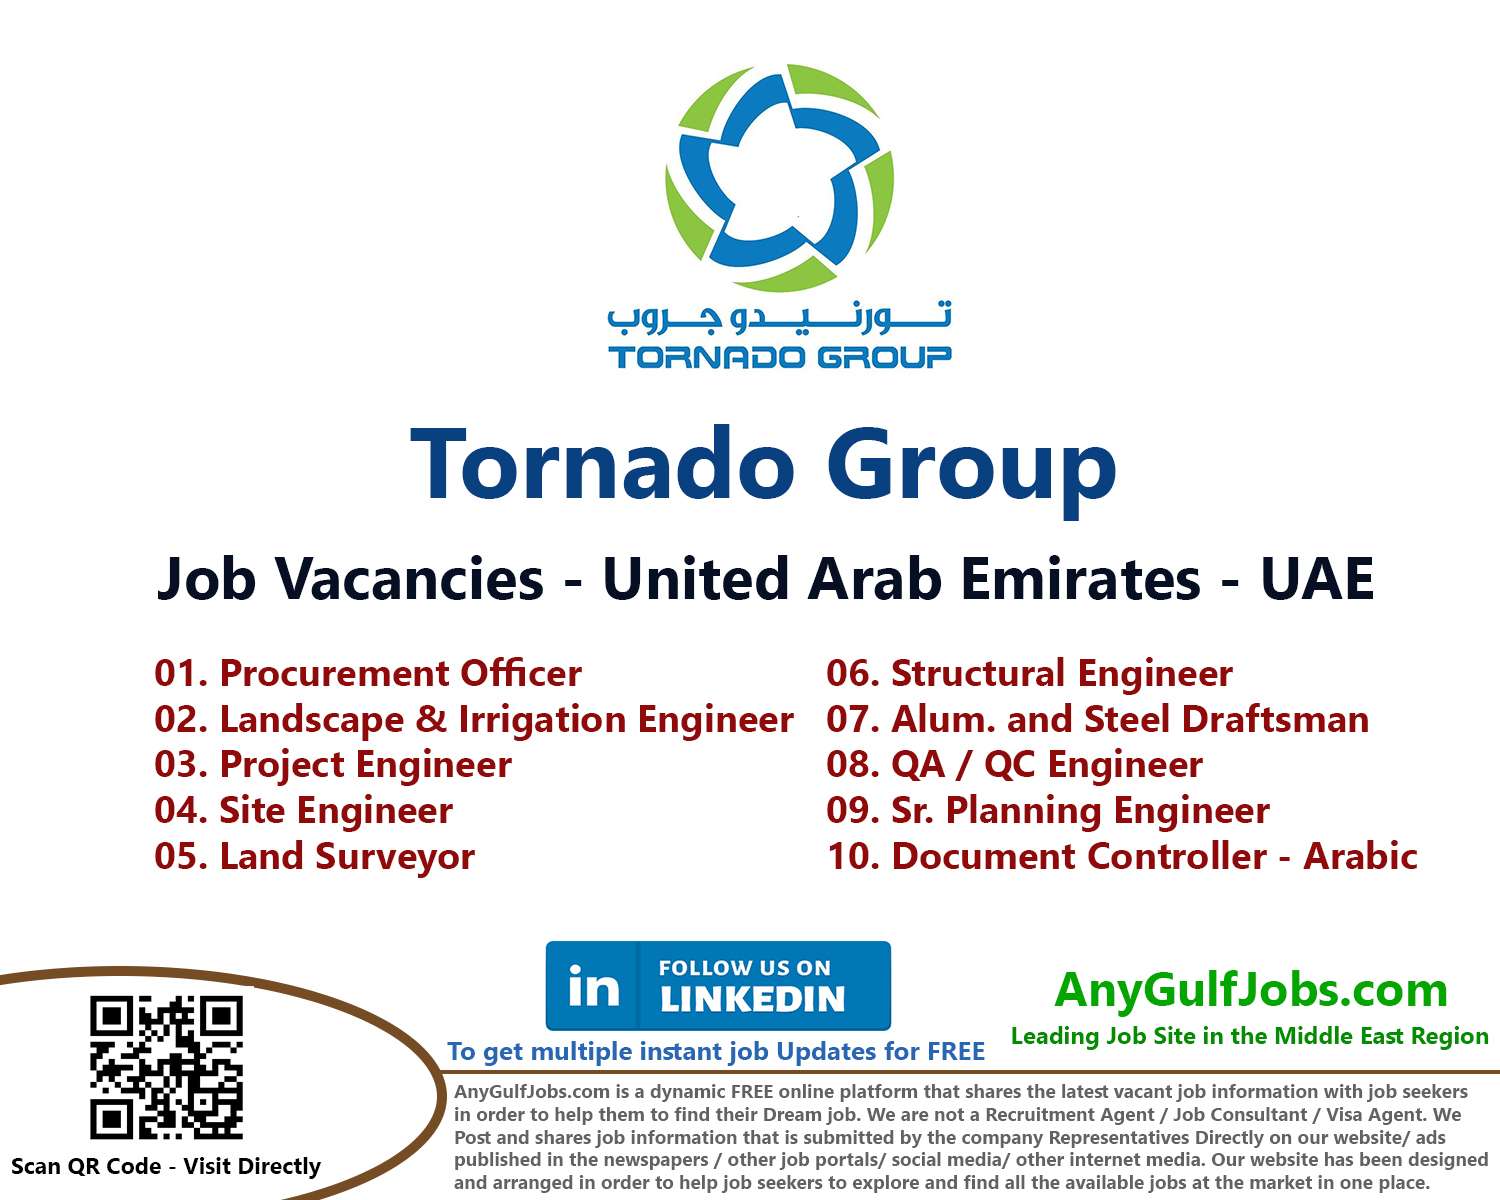 Multiple Job Vacancies  - Tornado Group Job Vacancies - United Arab Emirates - UAE